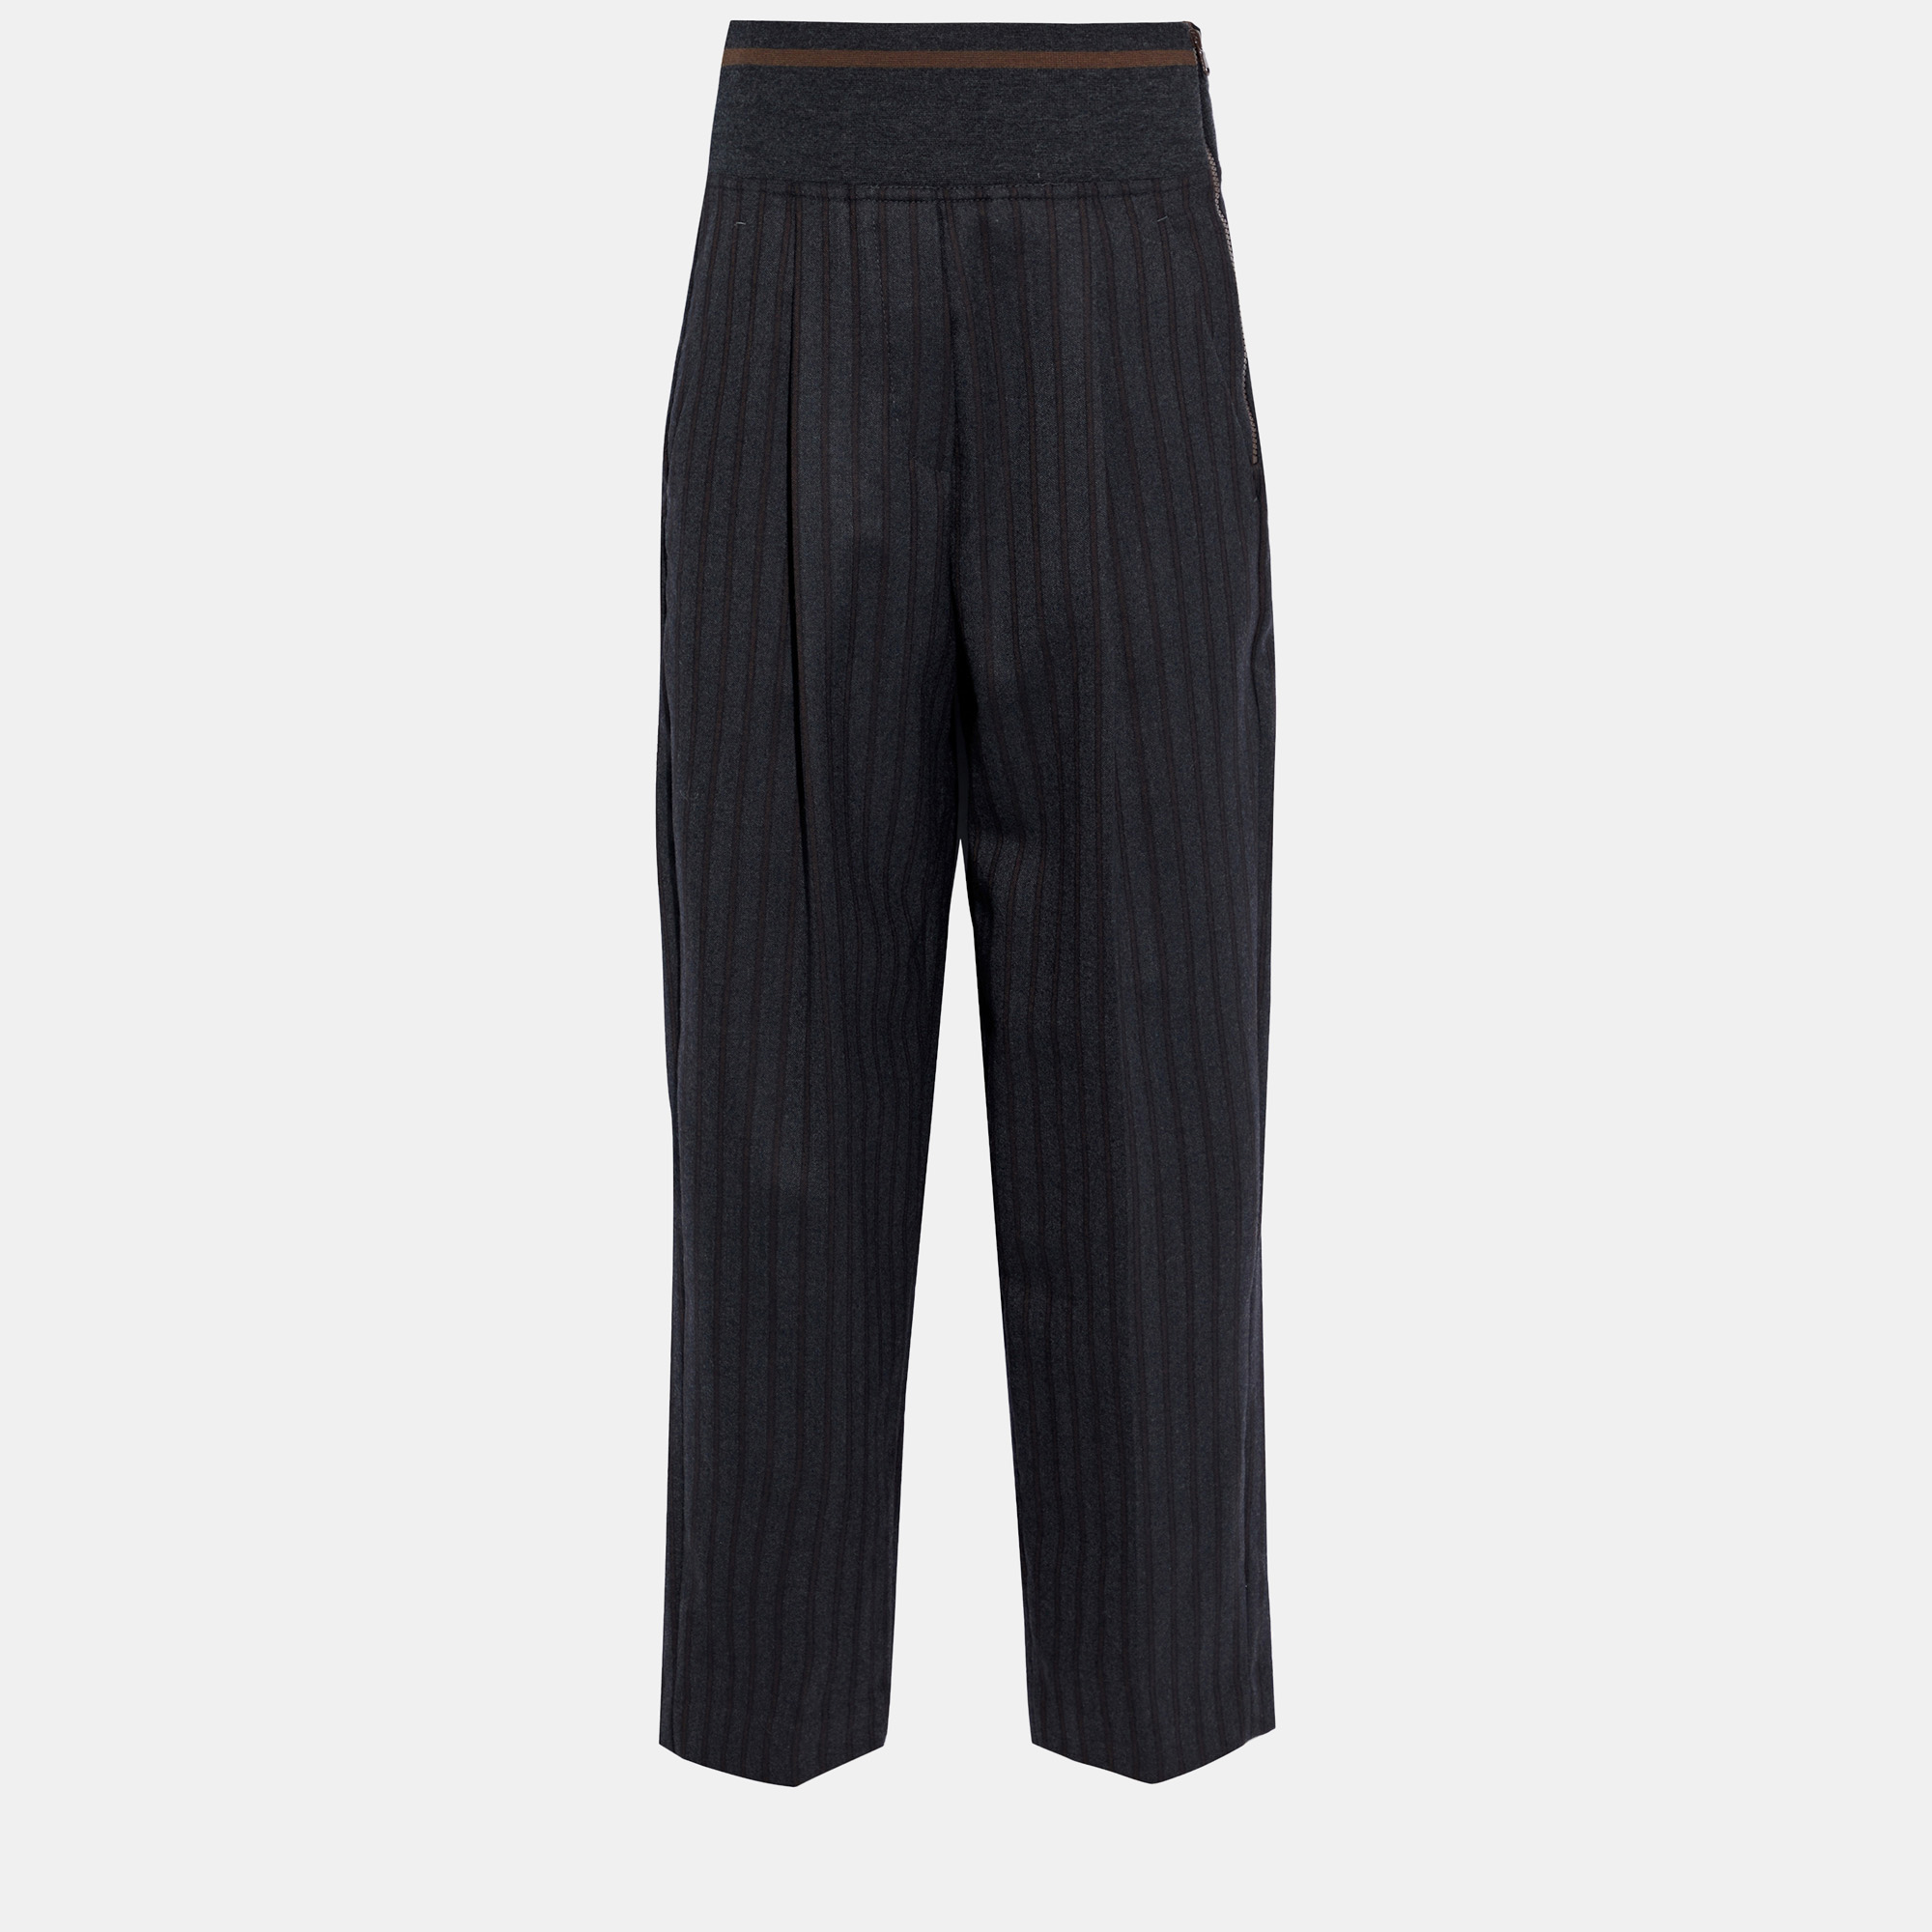 

Brunello Cucinelli Charcoal Grey Striped Wool Pants  (IT 38